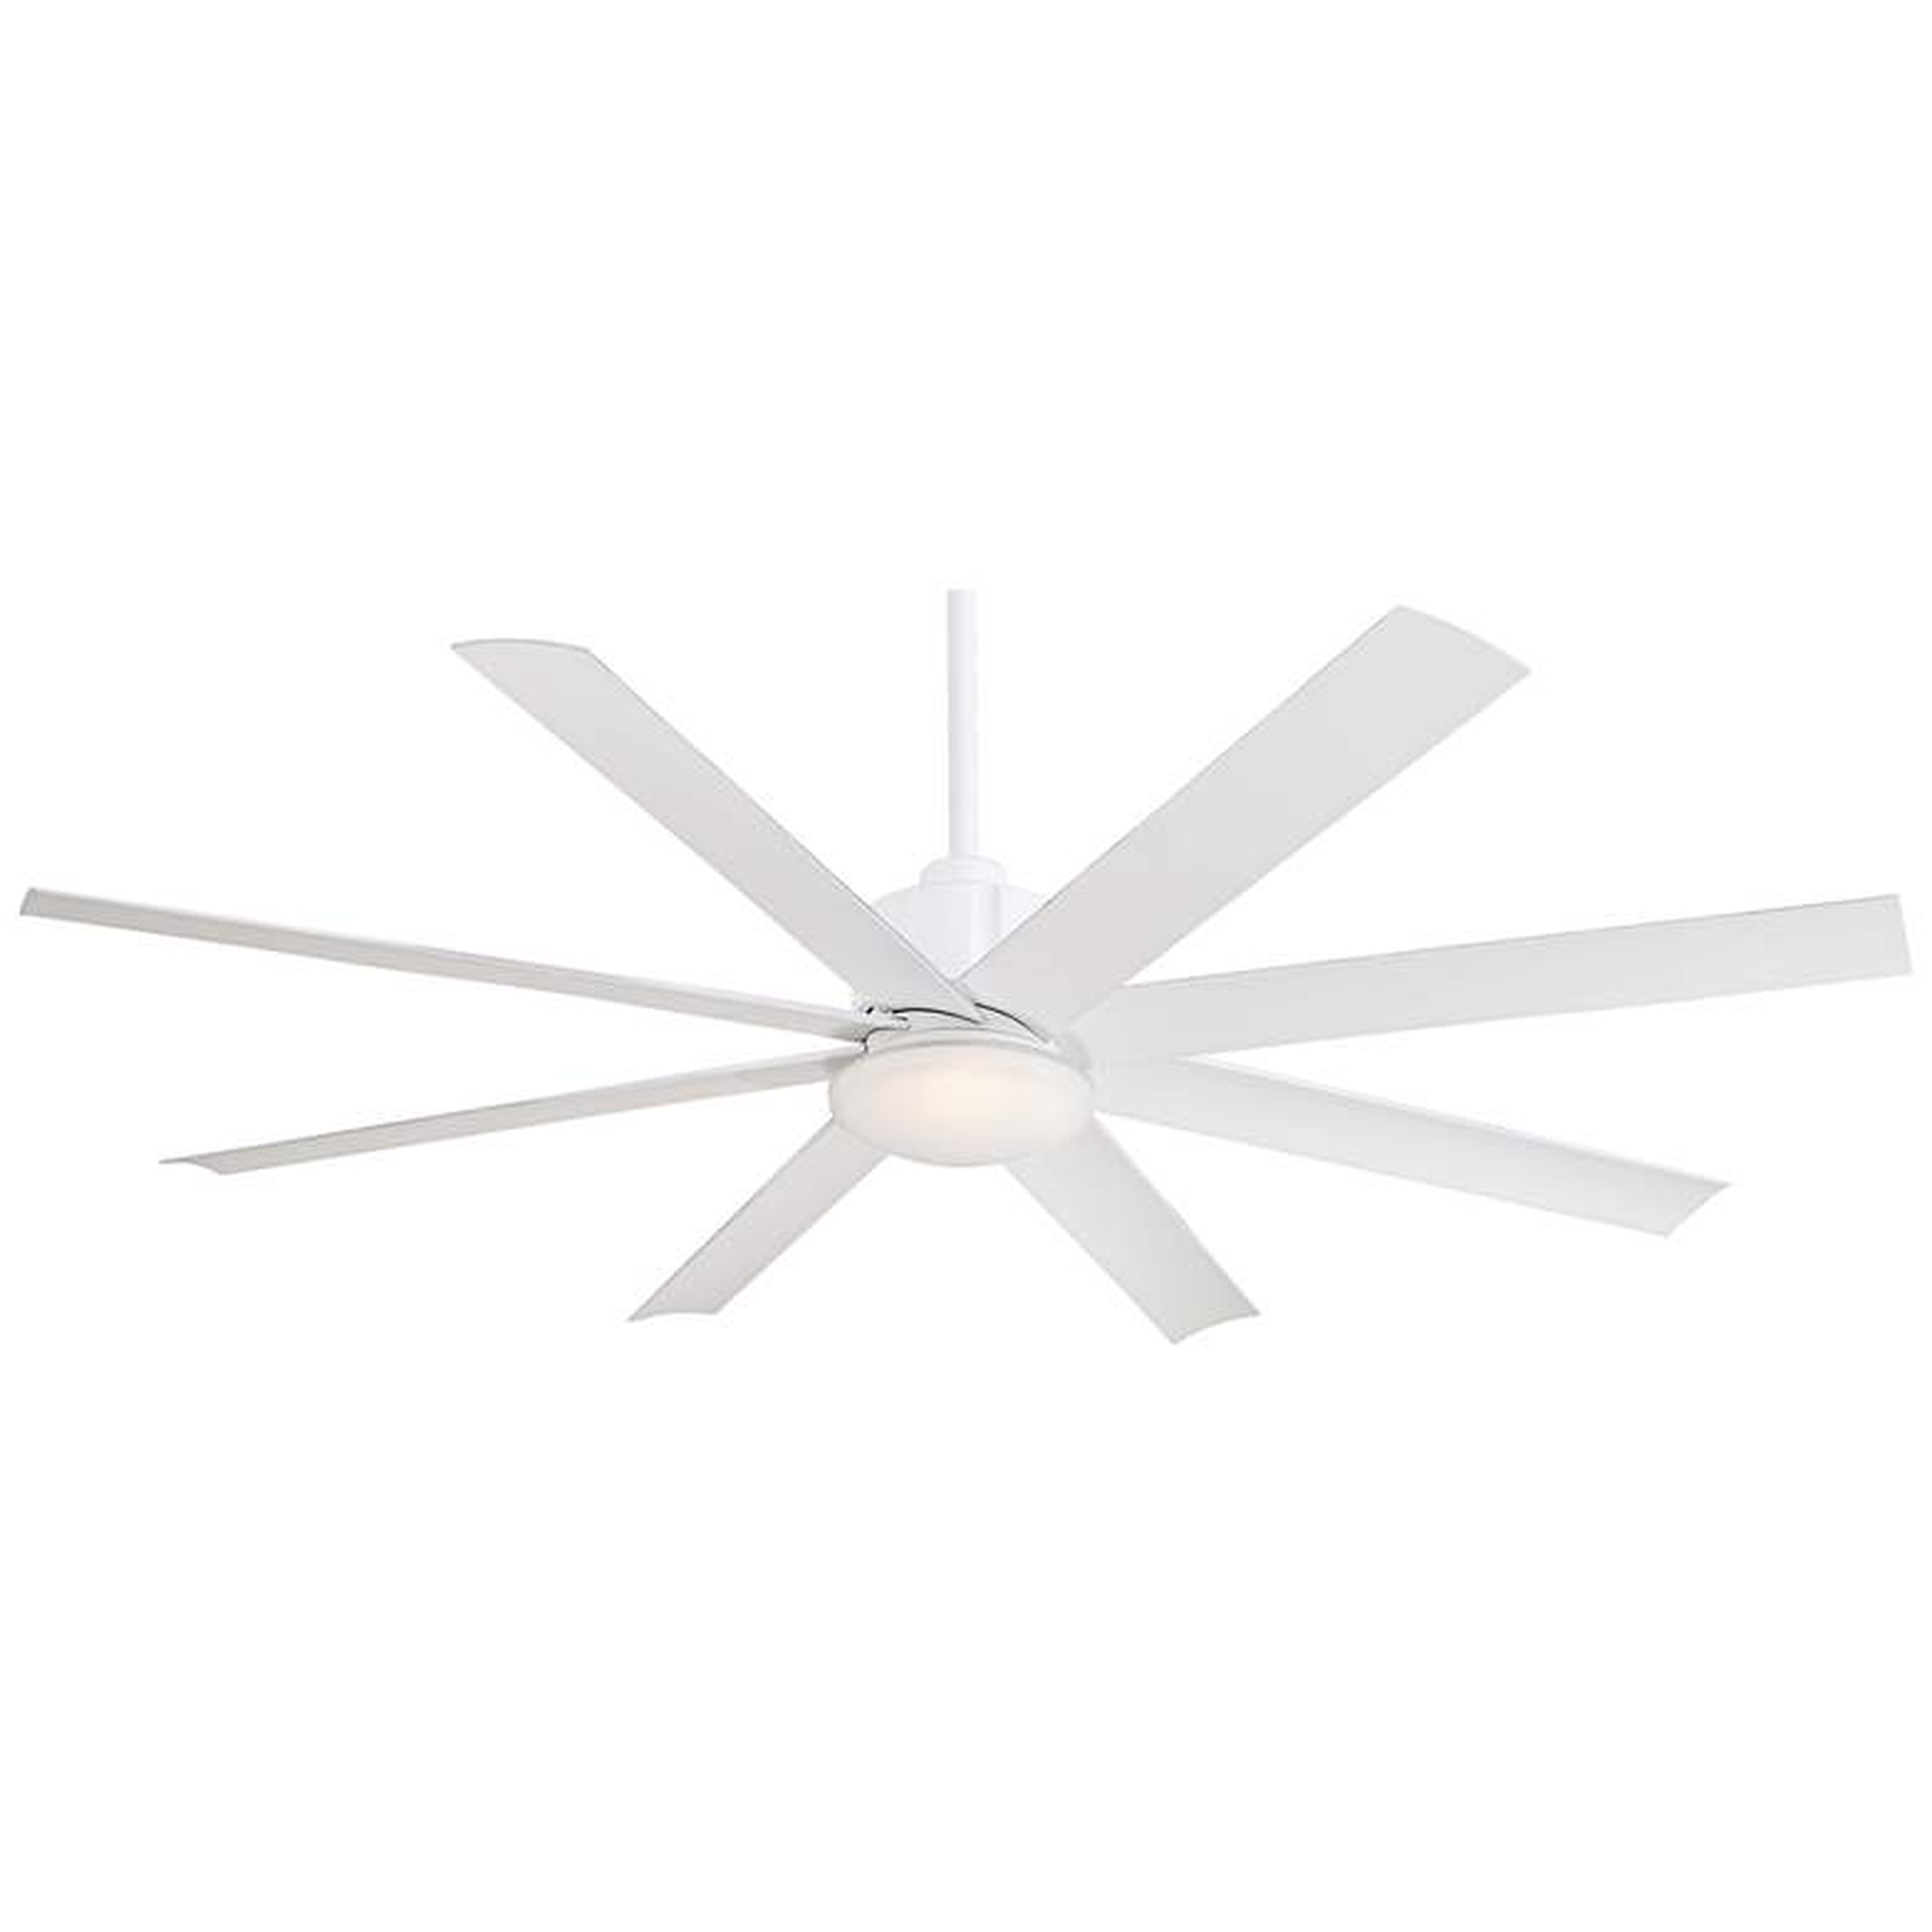 65" Minka Aire Slipstream White Outdoor LED Ceiling Fan - Lamps Plus